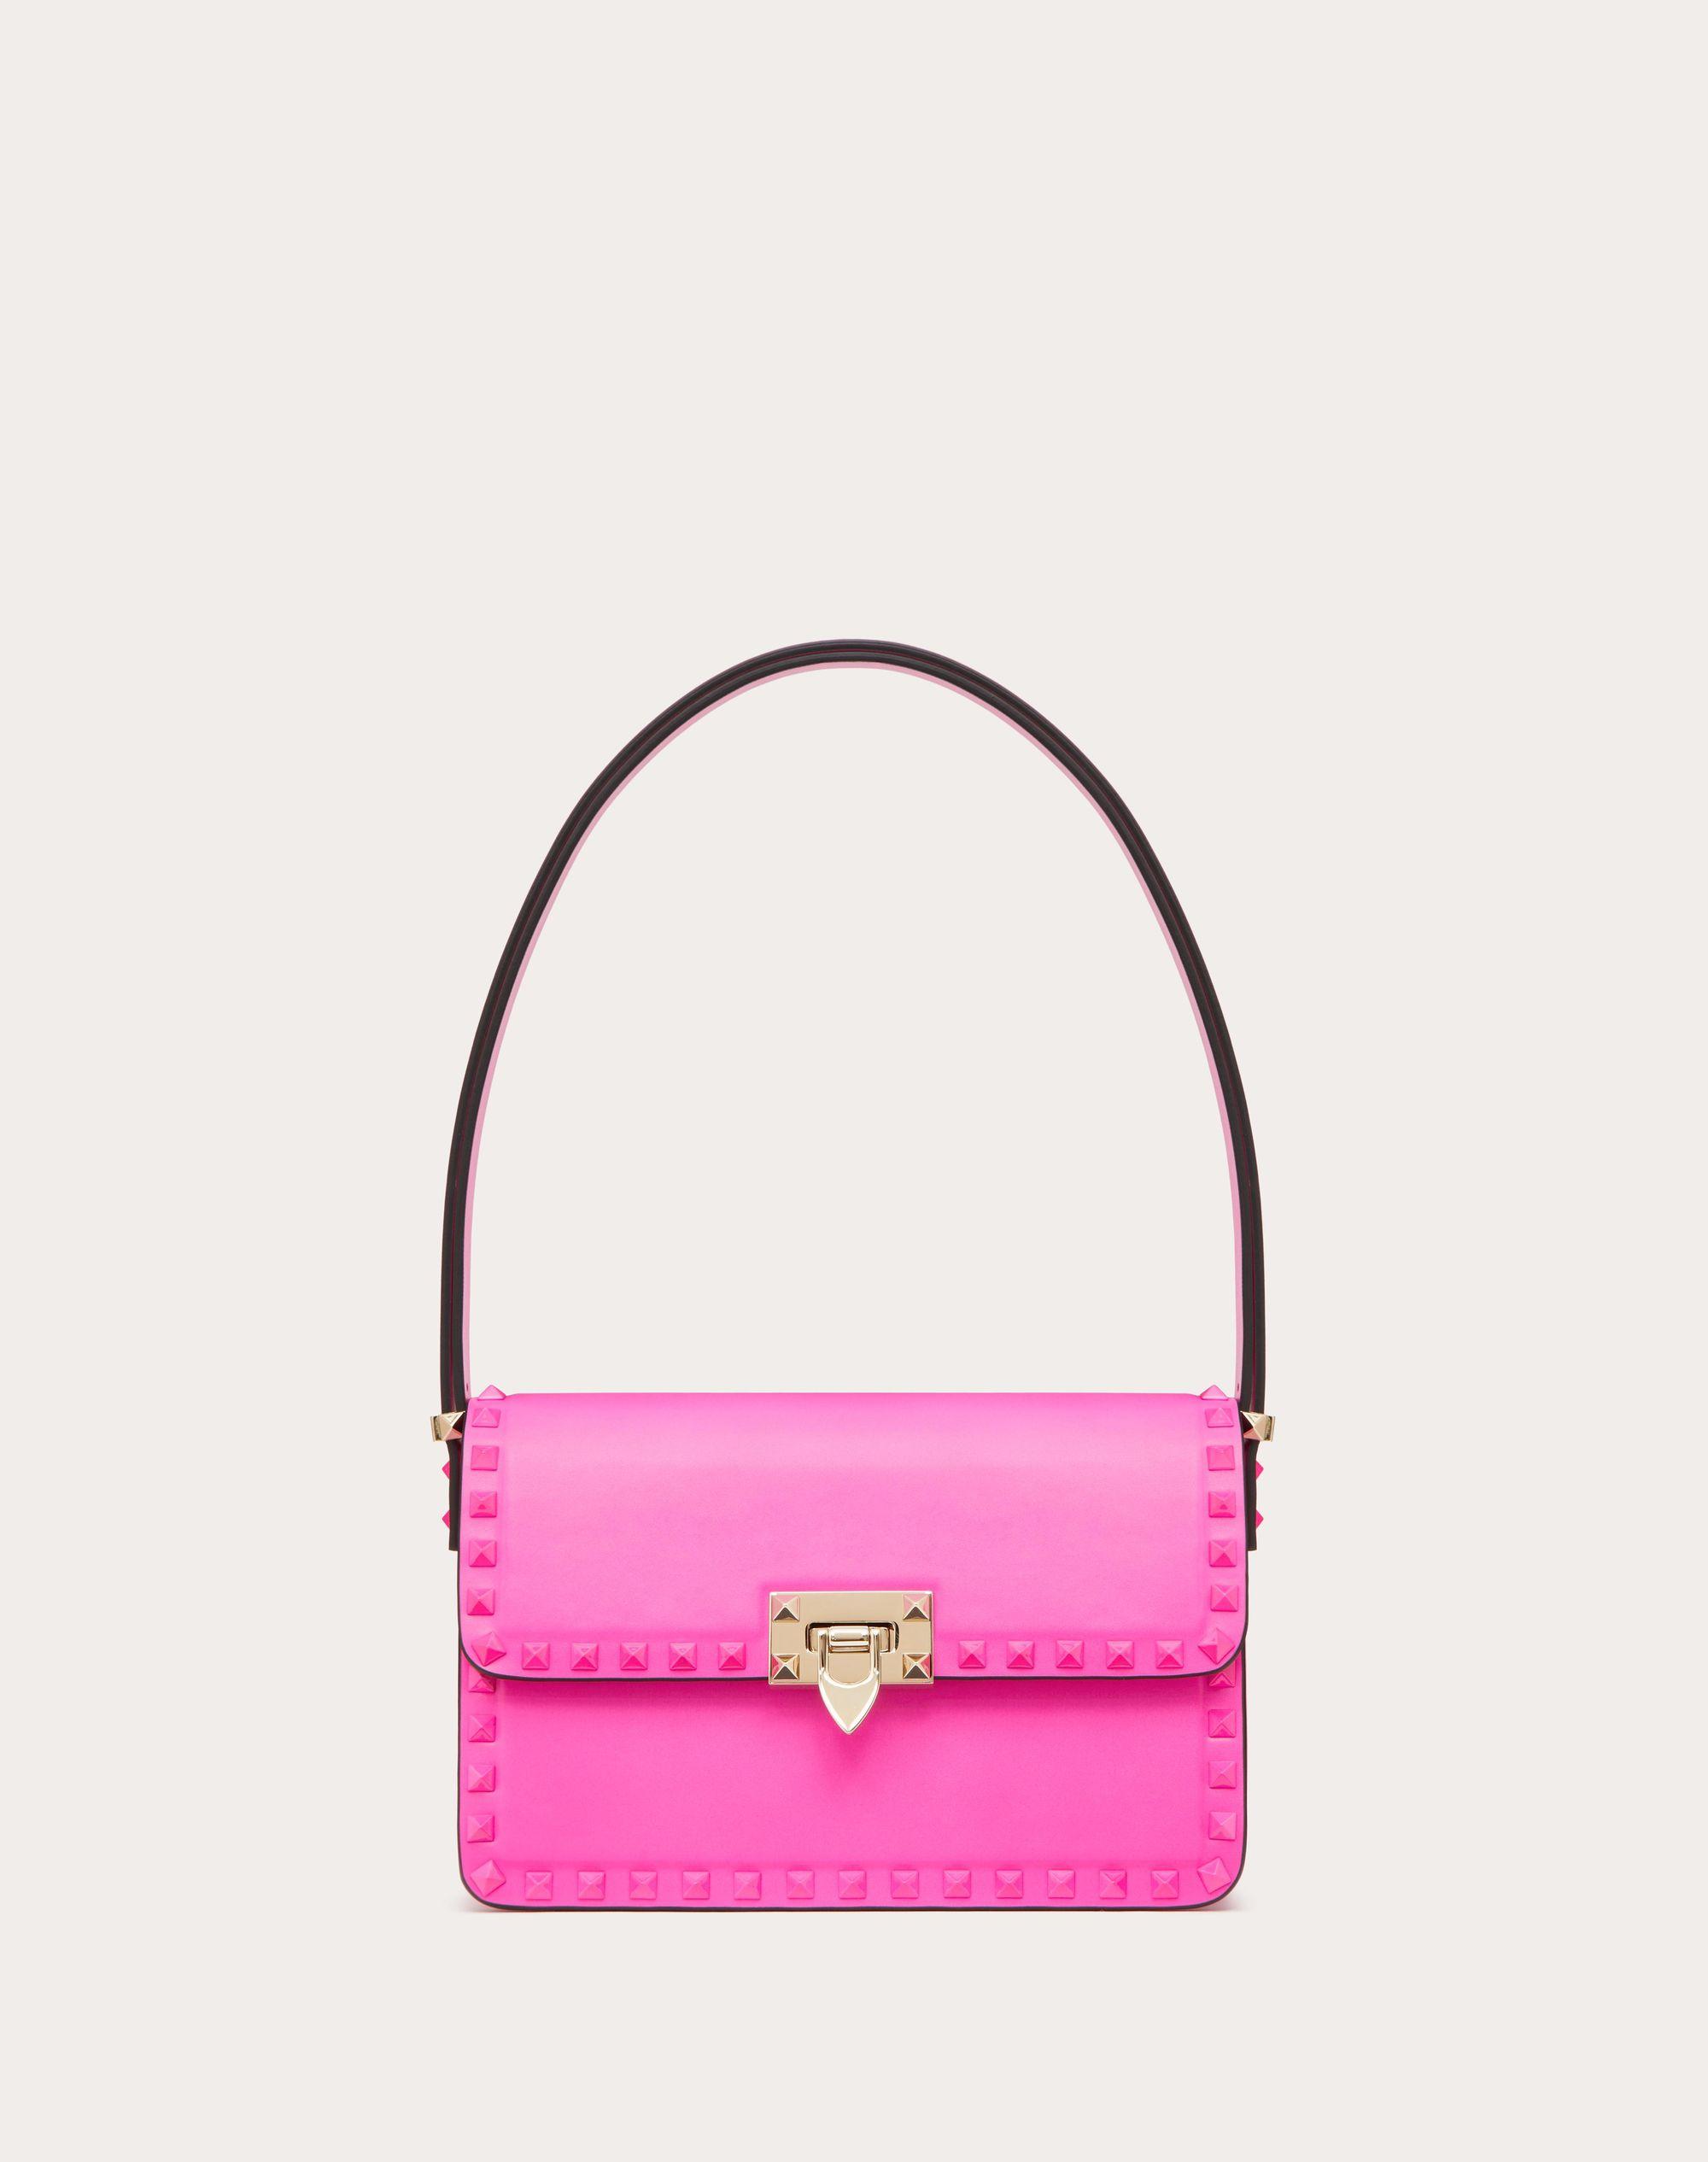 Valentino Garavani Rockstud23 Smooth Calfskin Shoulder Bag in Pink | Lyst